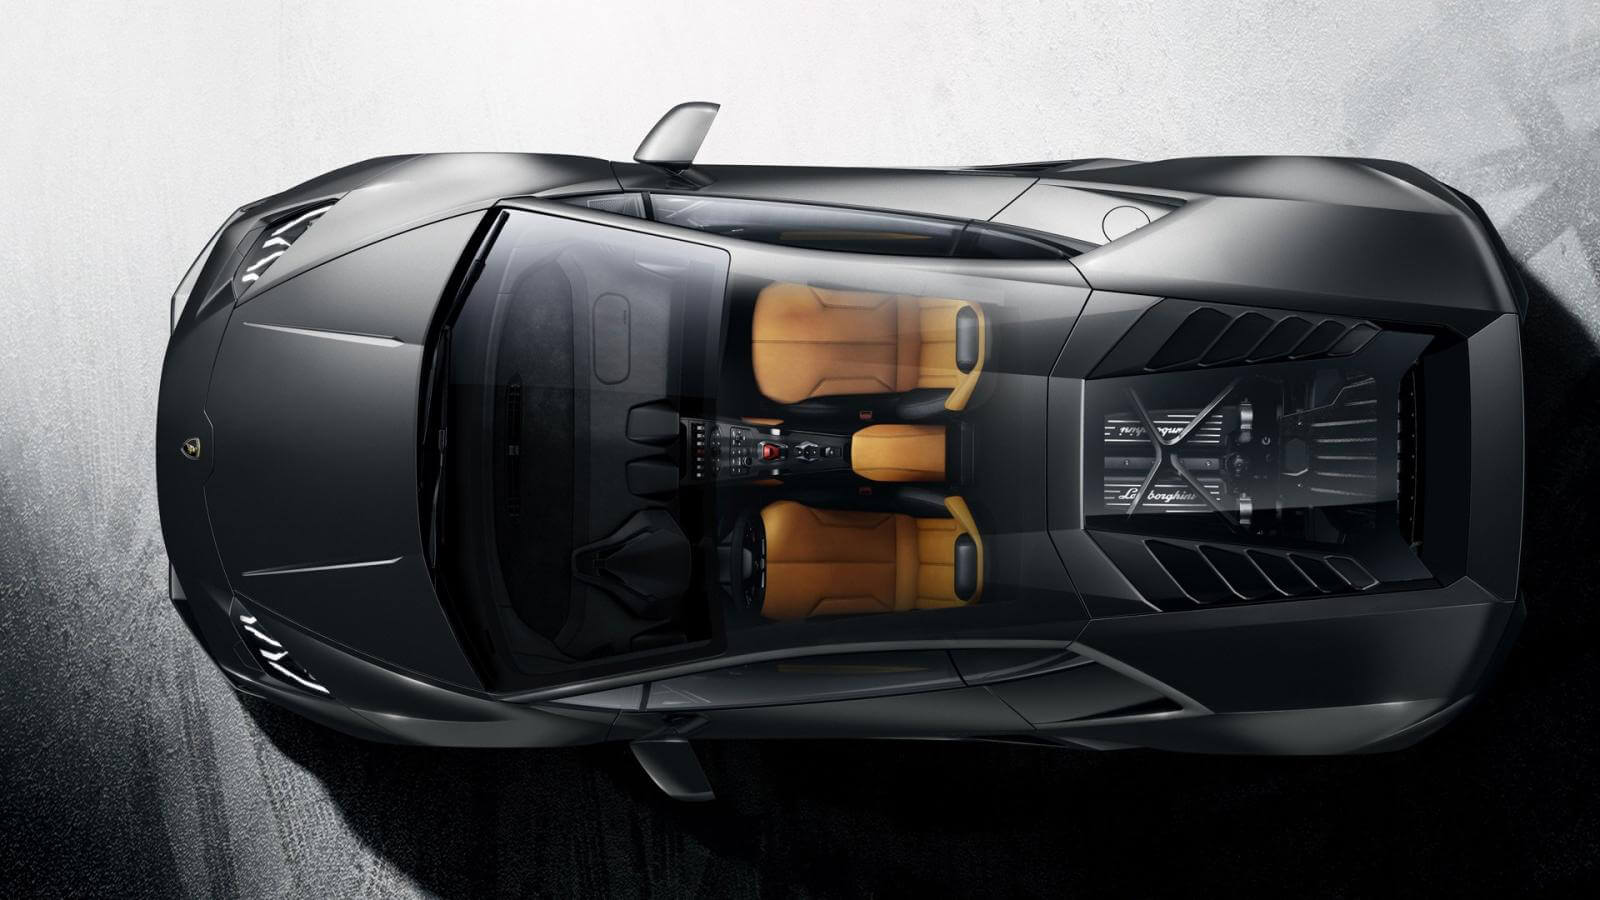 Lamborghini Huracan Spyder Top View - HD Wallpaper 